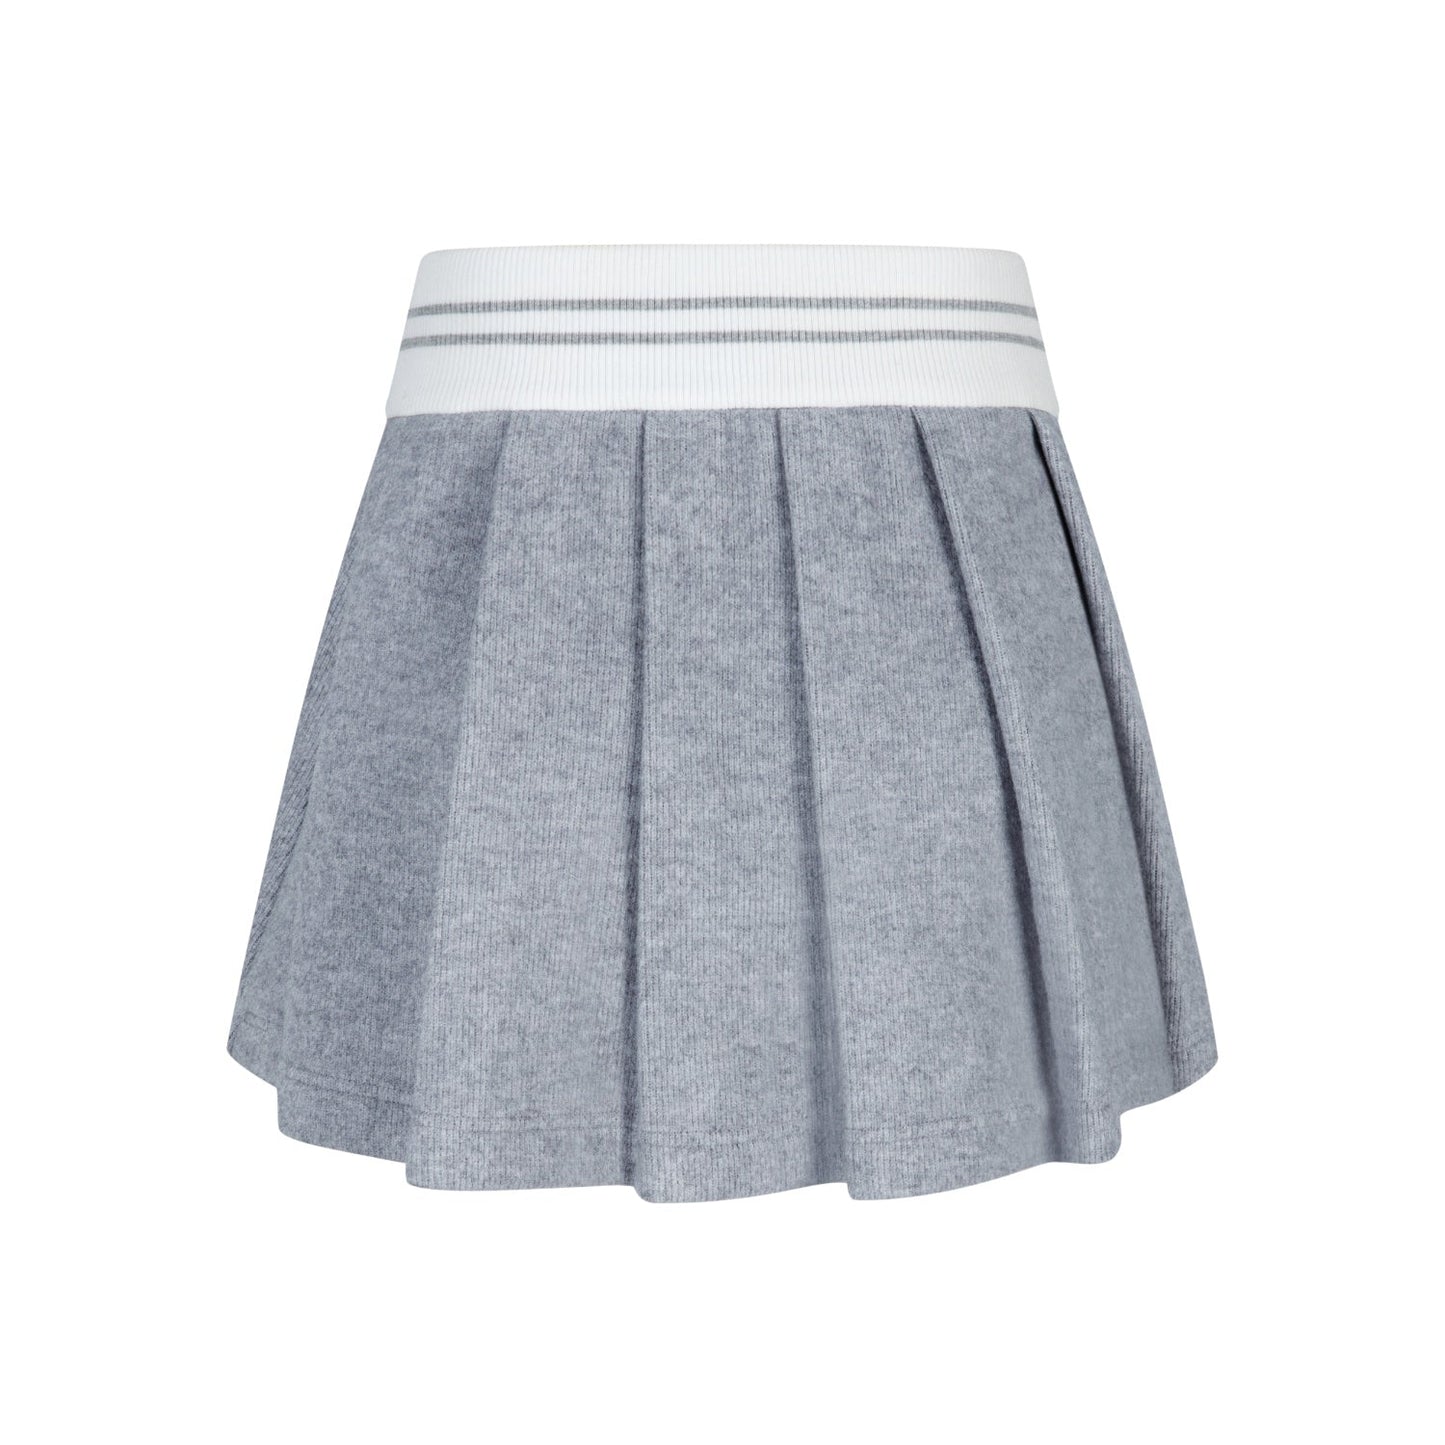 Herlian Grey Tennis Pleated Skirt